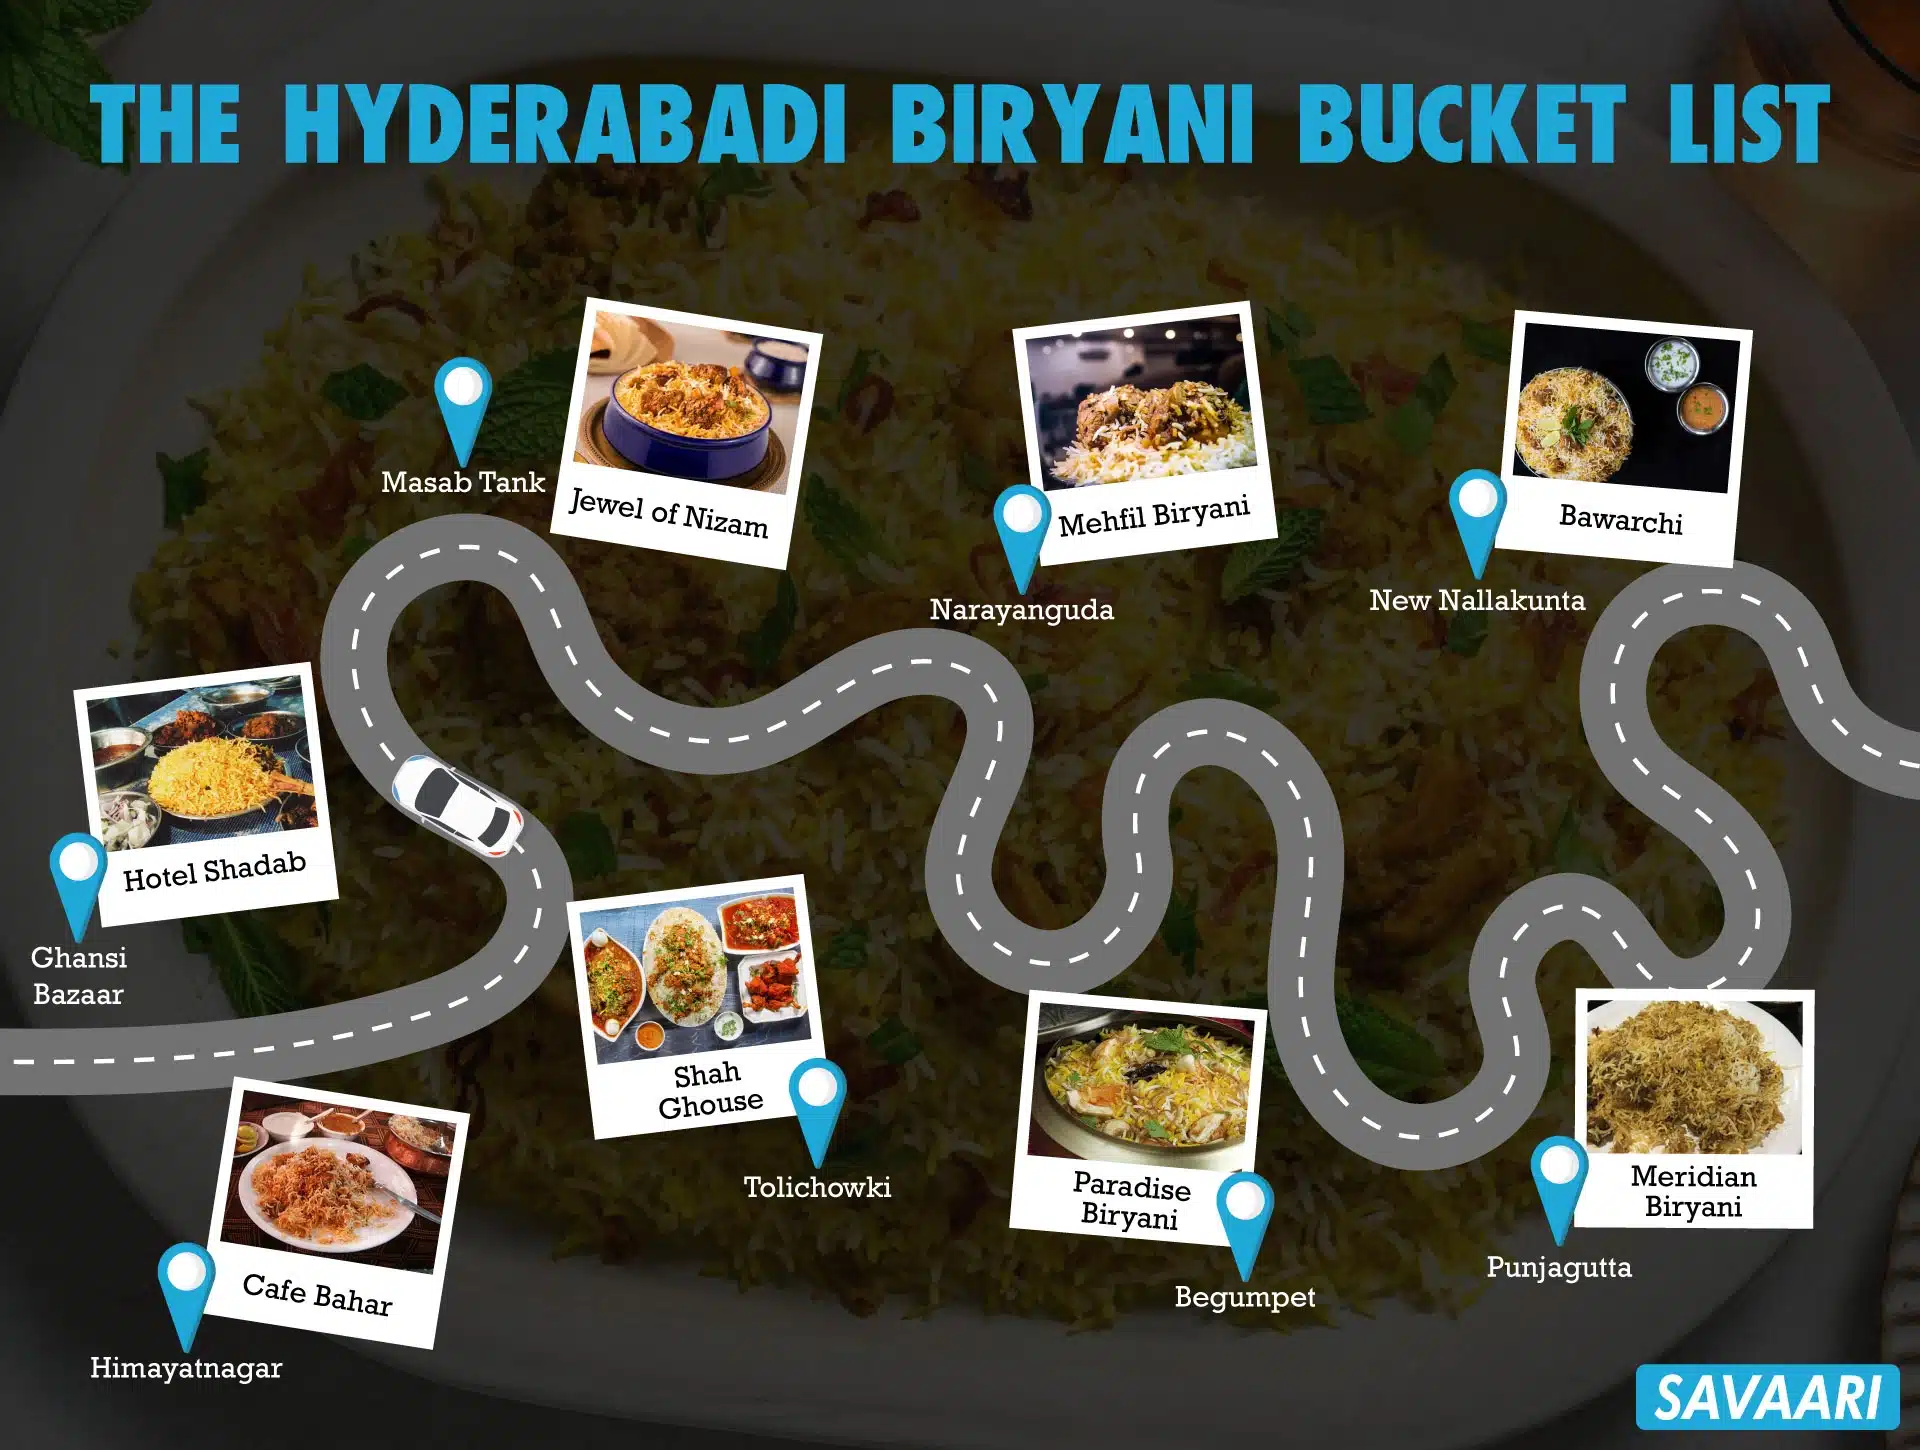 Top places for Hyderabadi biryani
 